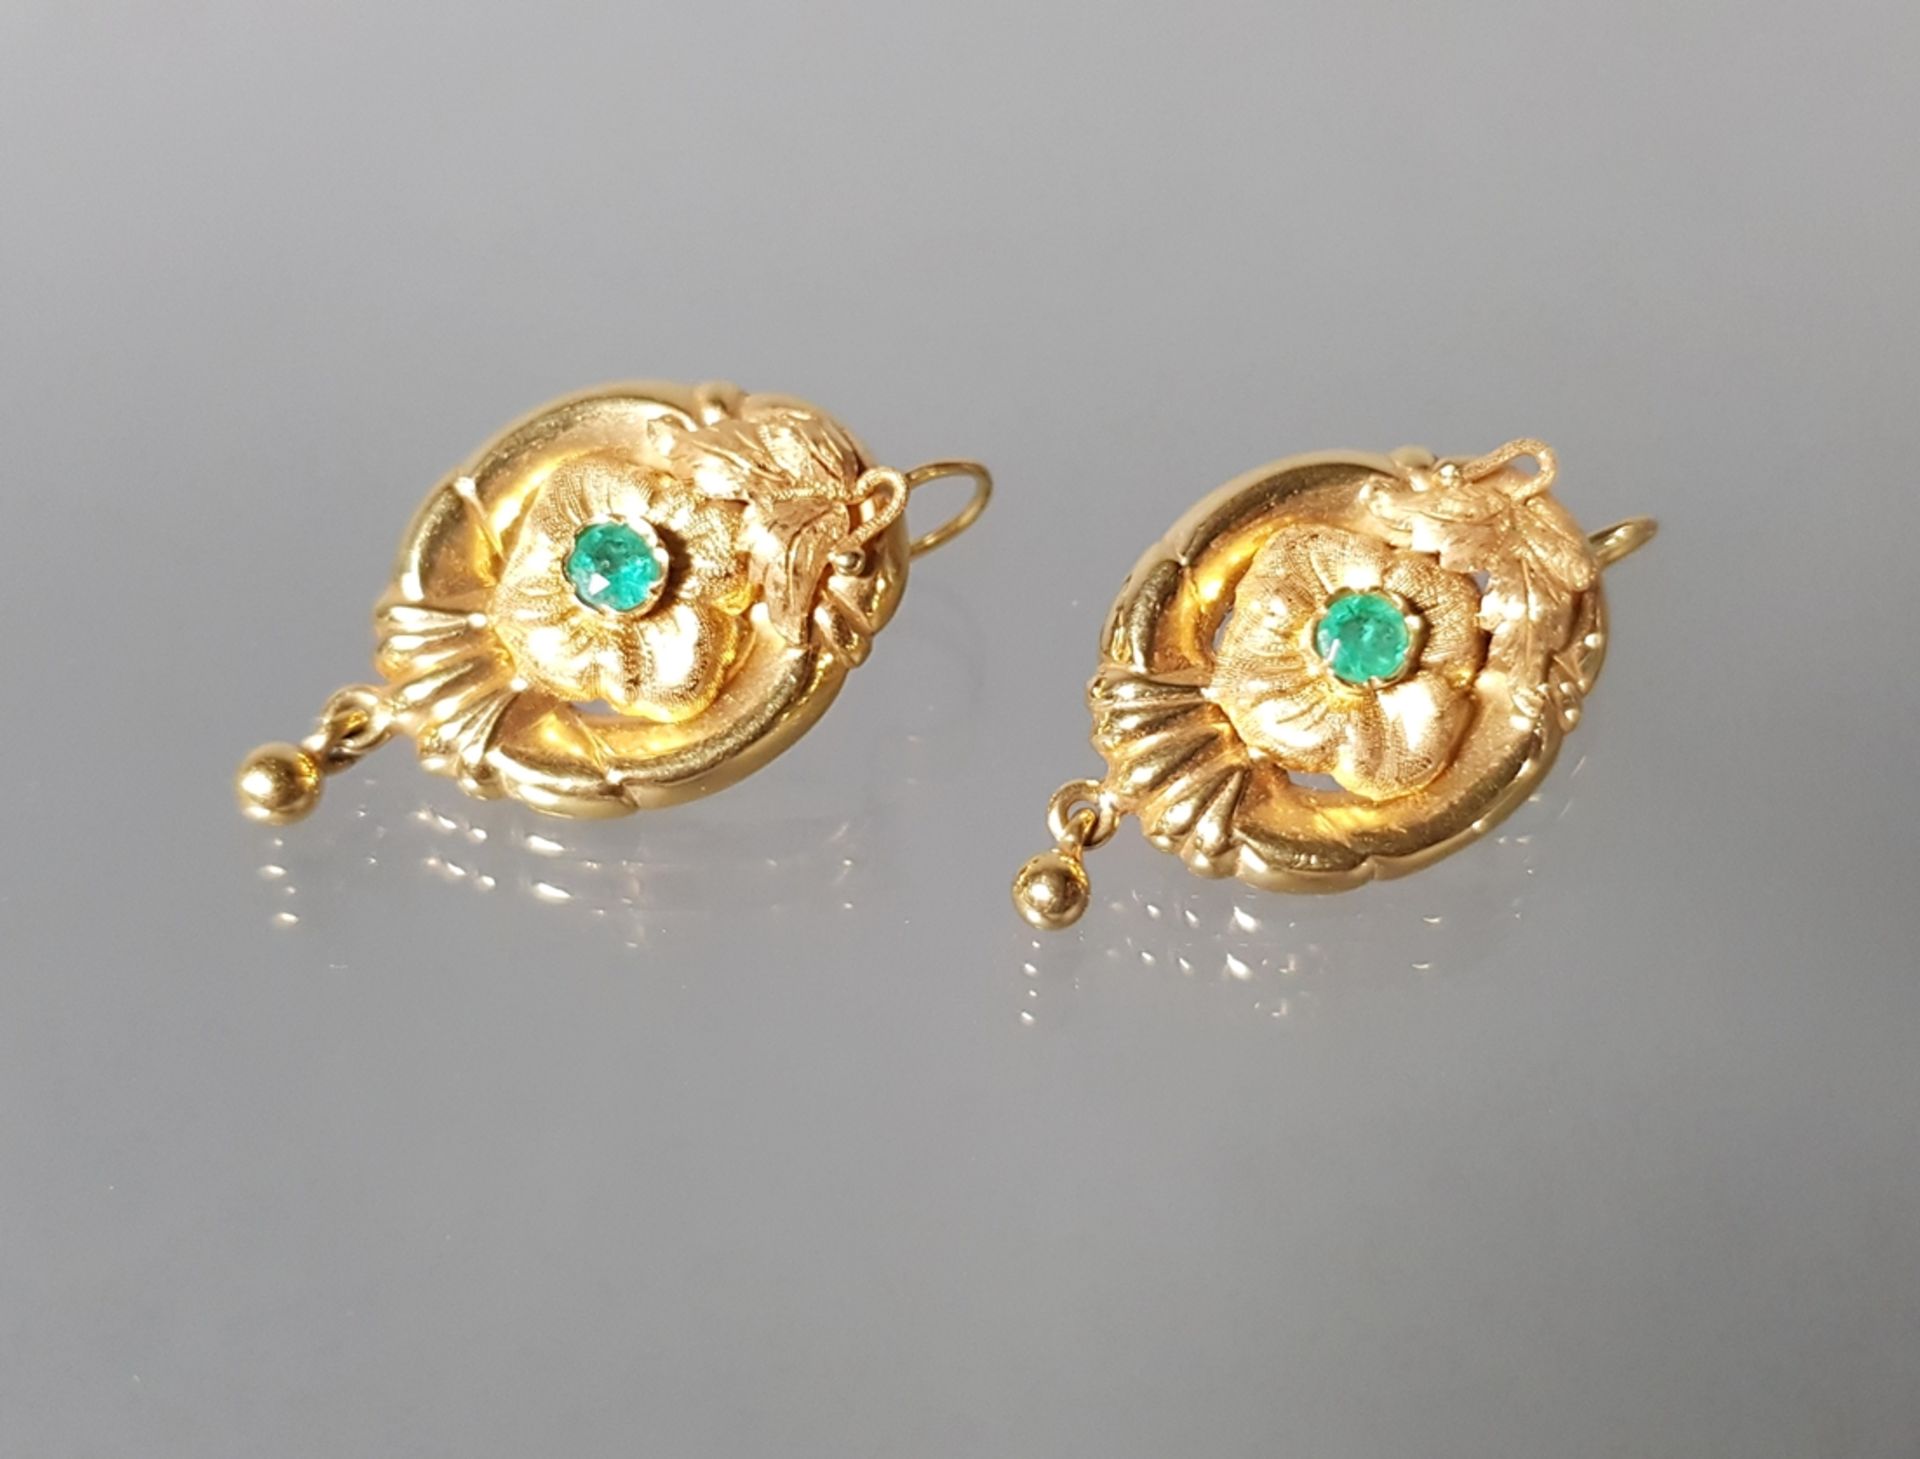 Paar Ohrgehänge, Schaumgold, 2. Hälfte 19. Jh., wohl 2 kleine Smaragde, Hängung GG 585, 7 g